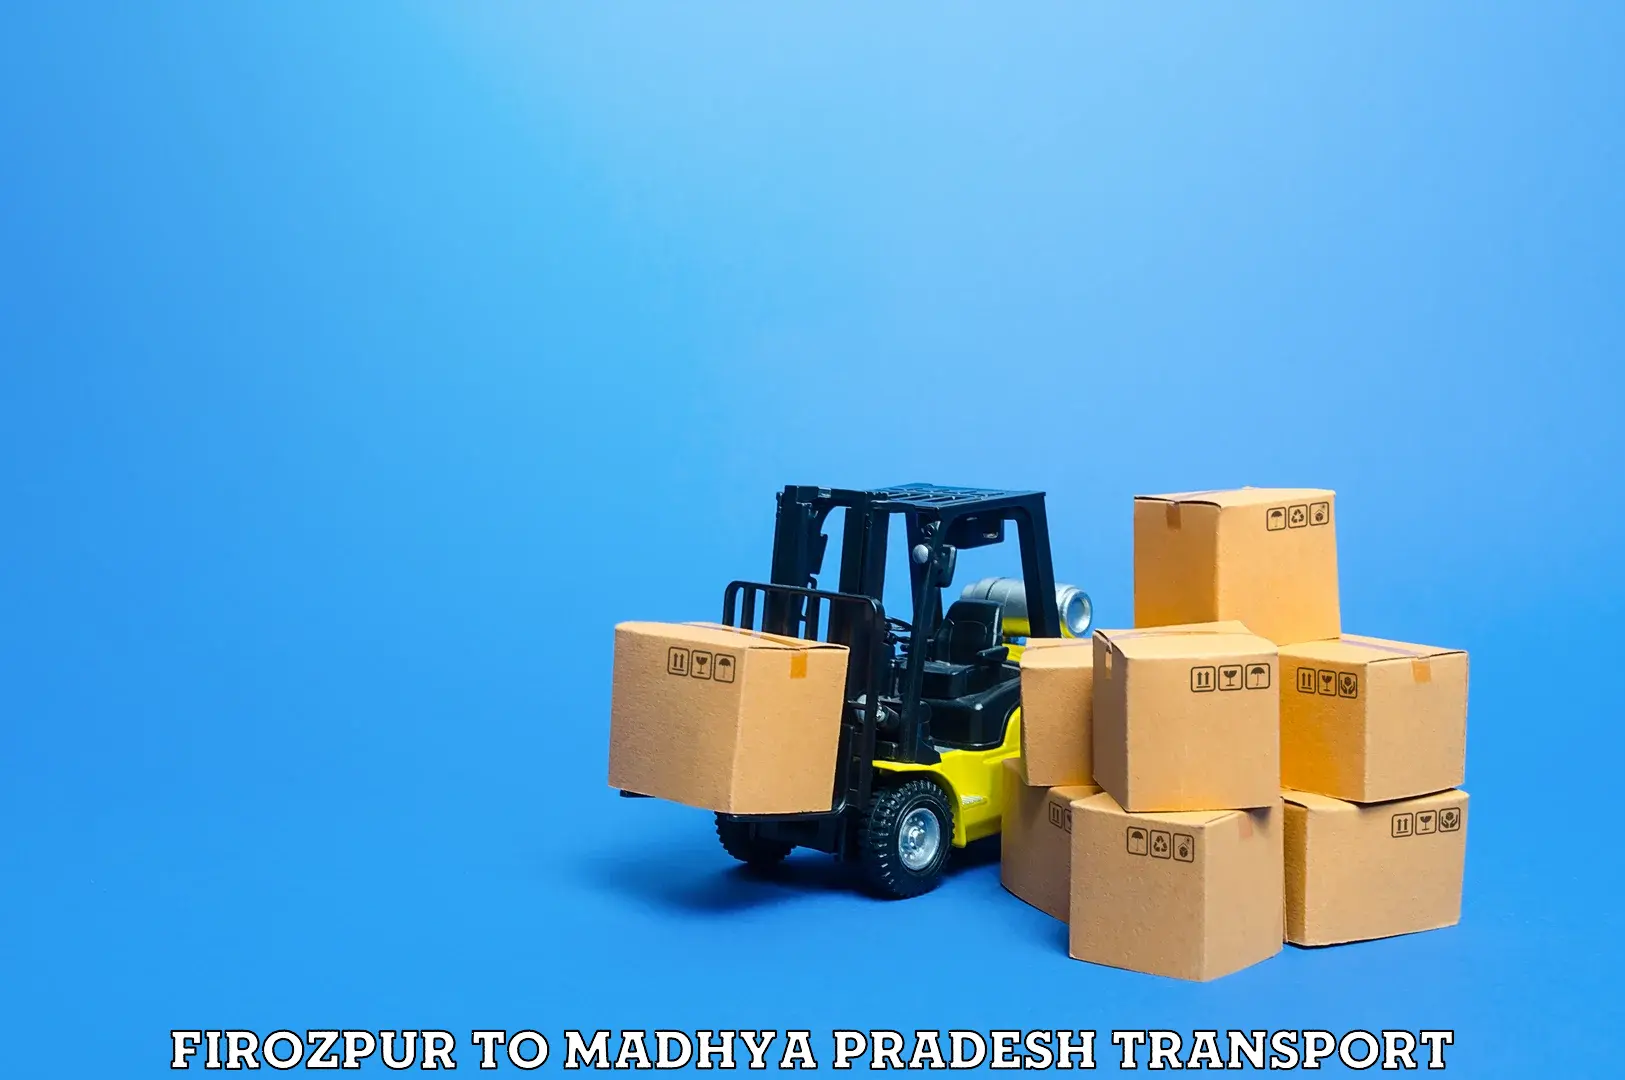 Commercial transport service Firozpur to Raghogarh